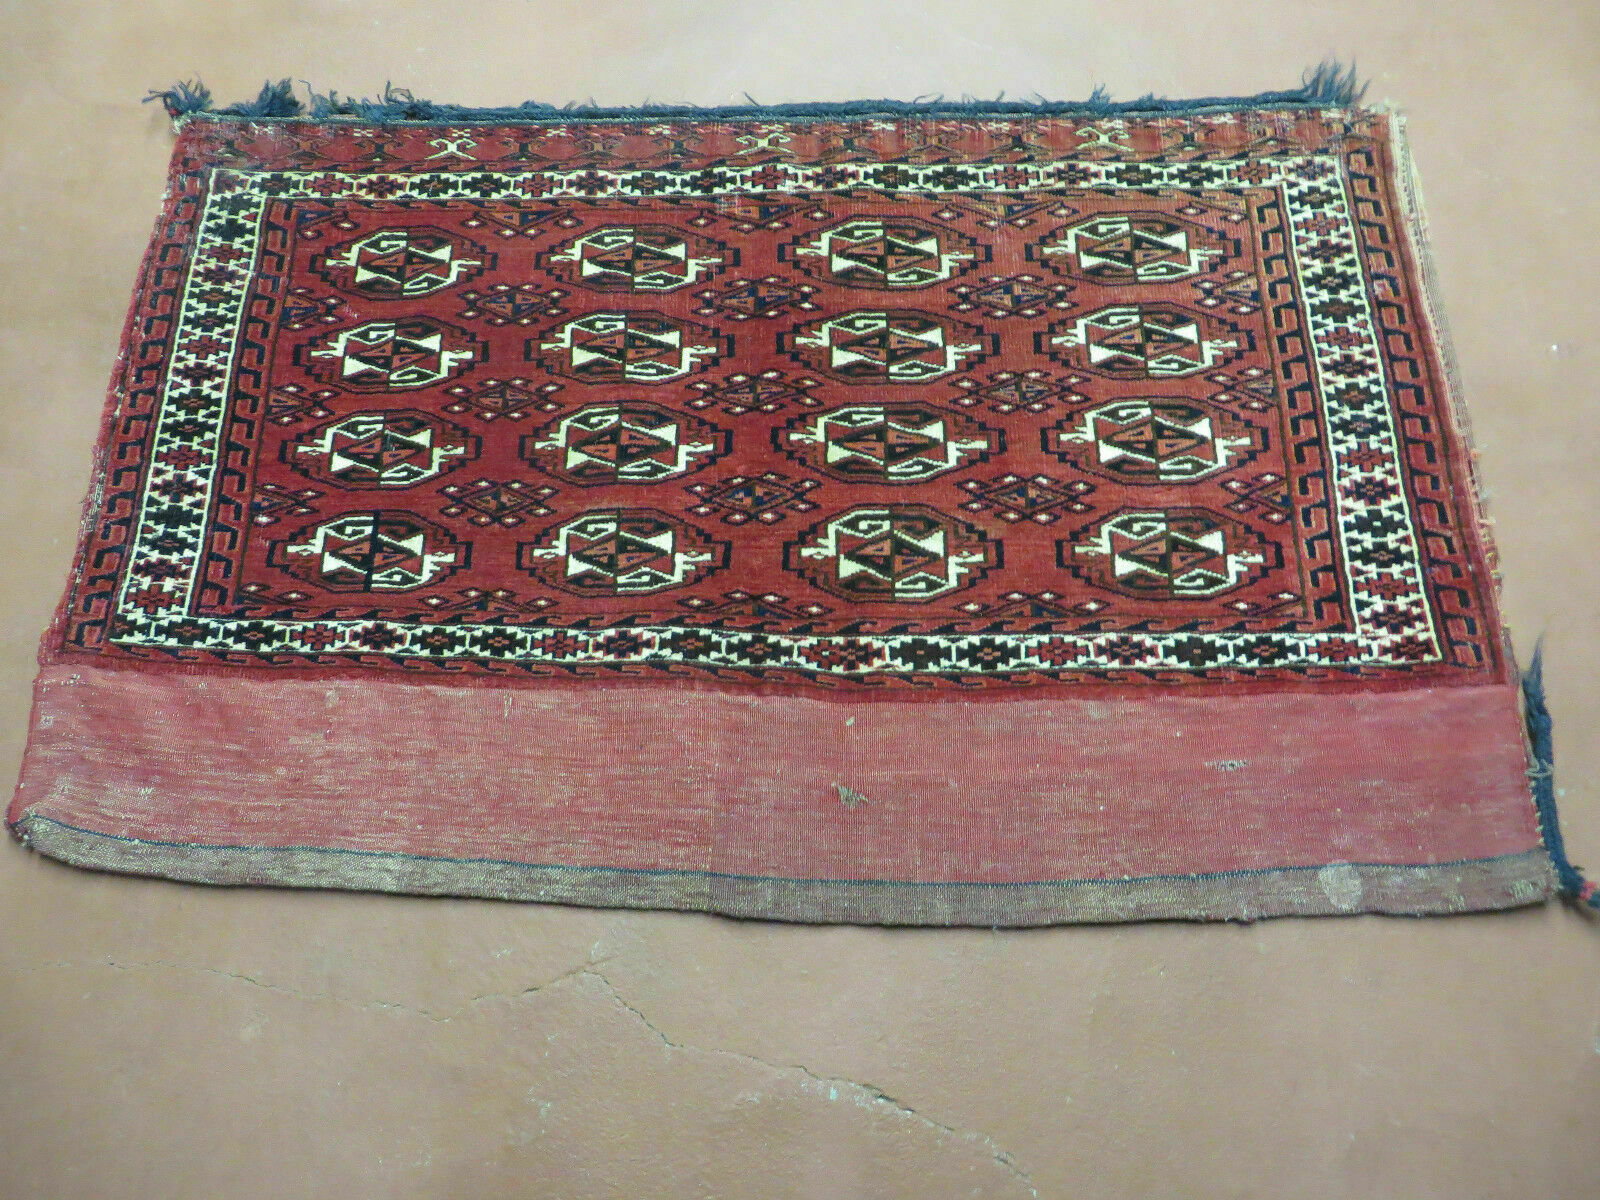 2.5' X 4' Antique Handmade Red Turkoman Tribal Wool Rug Cushion Case Elephant